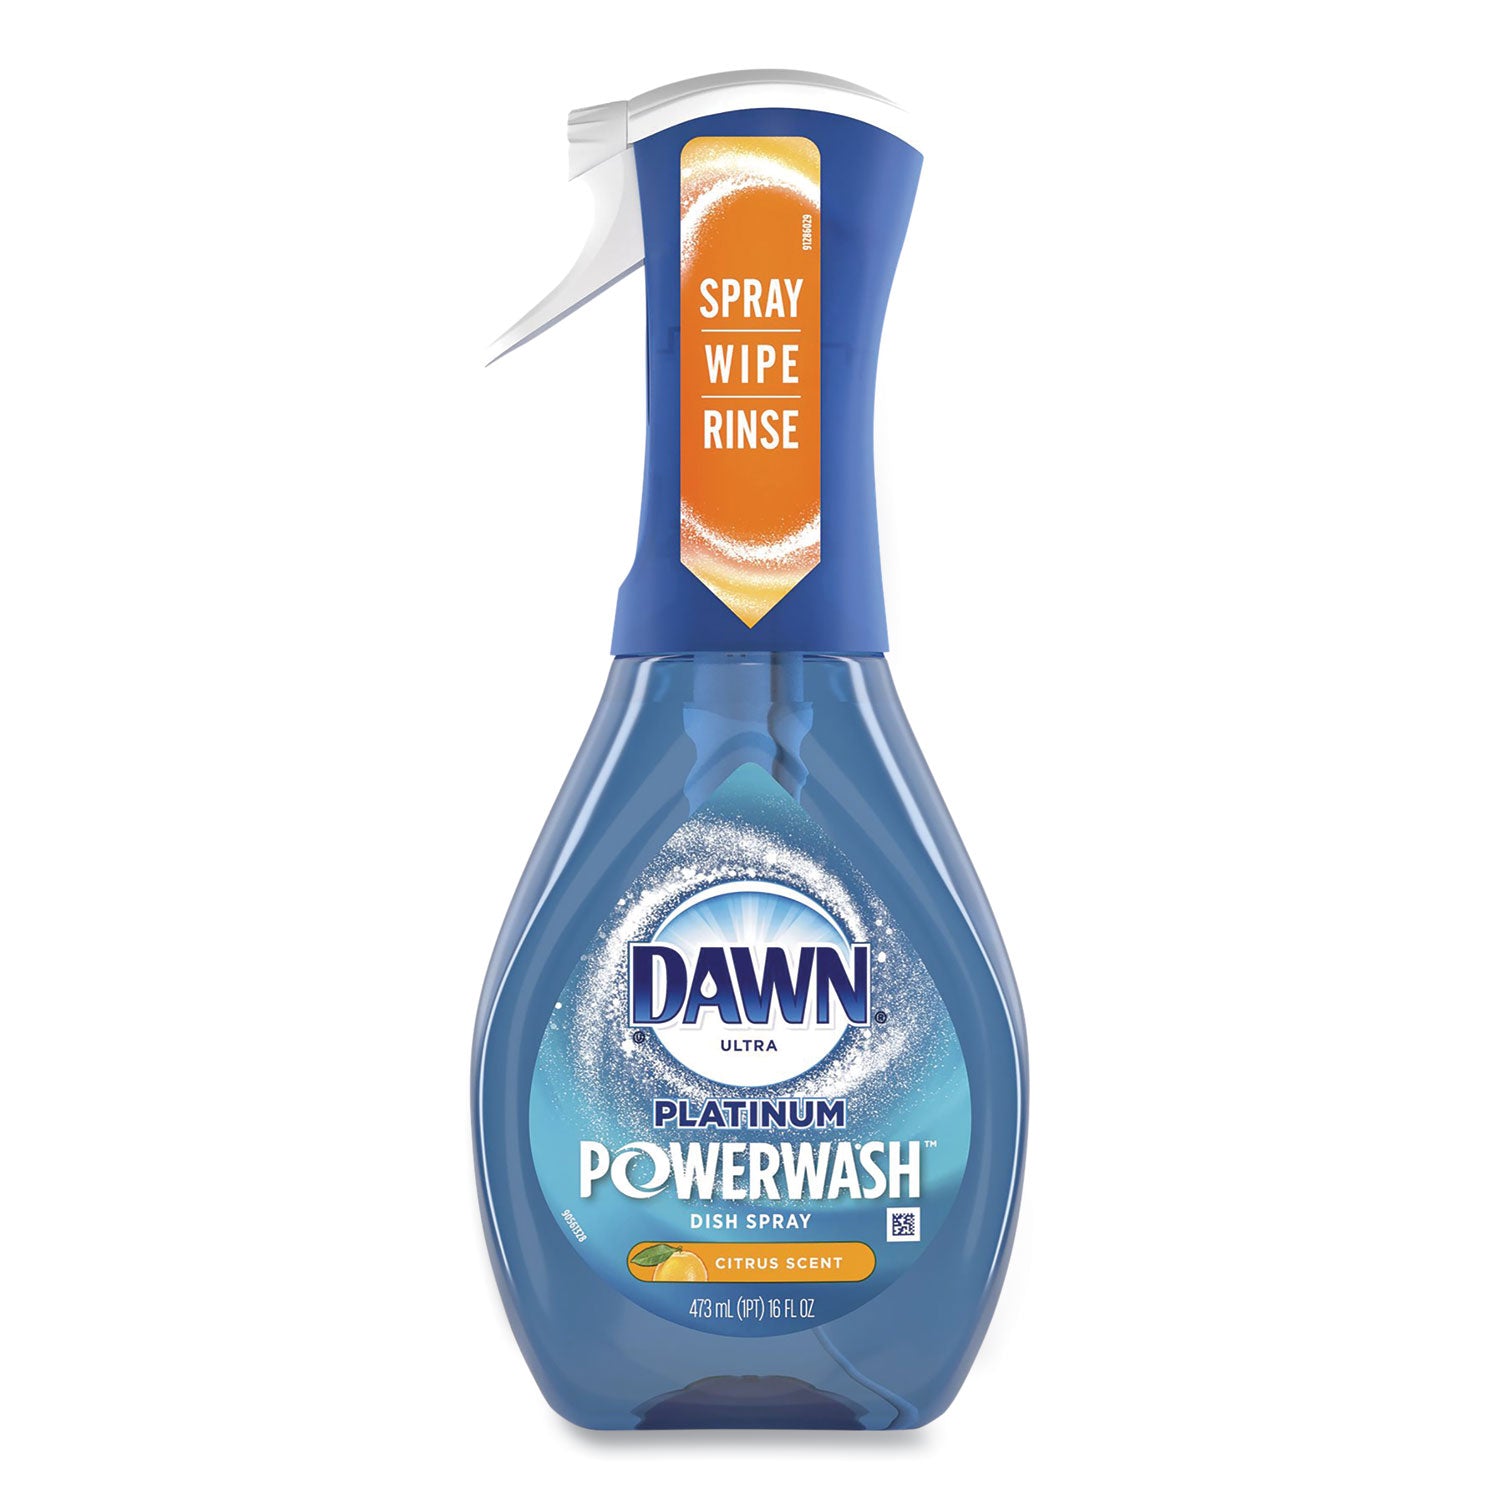 platinum-powerwash-dish-spray-citrus-scent-16-oz-spray-bottle_pgc40657 - 1